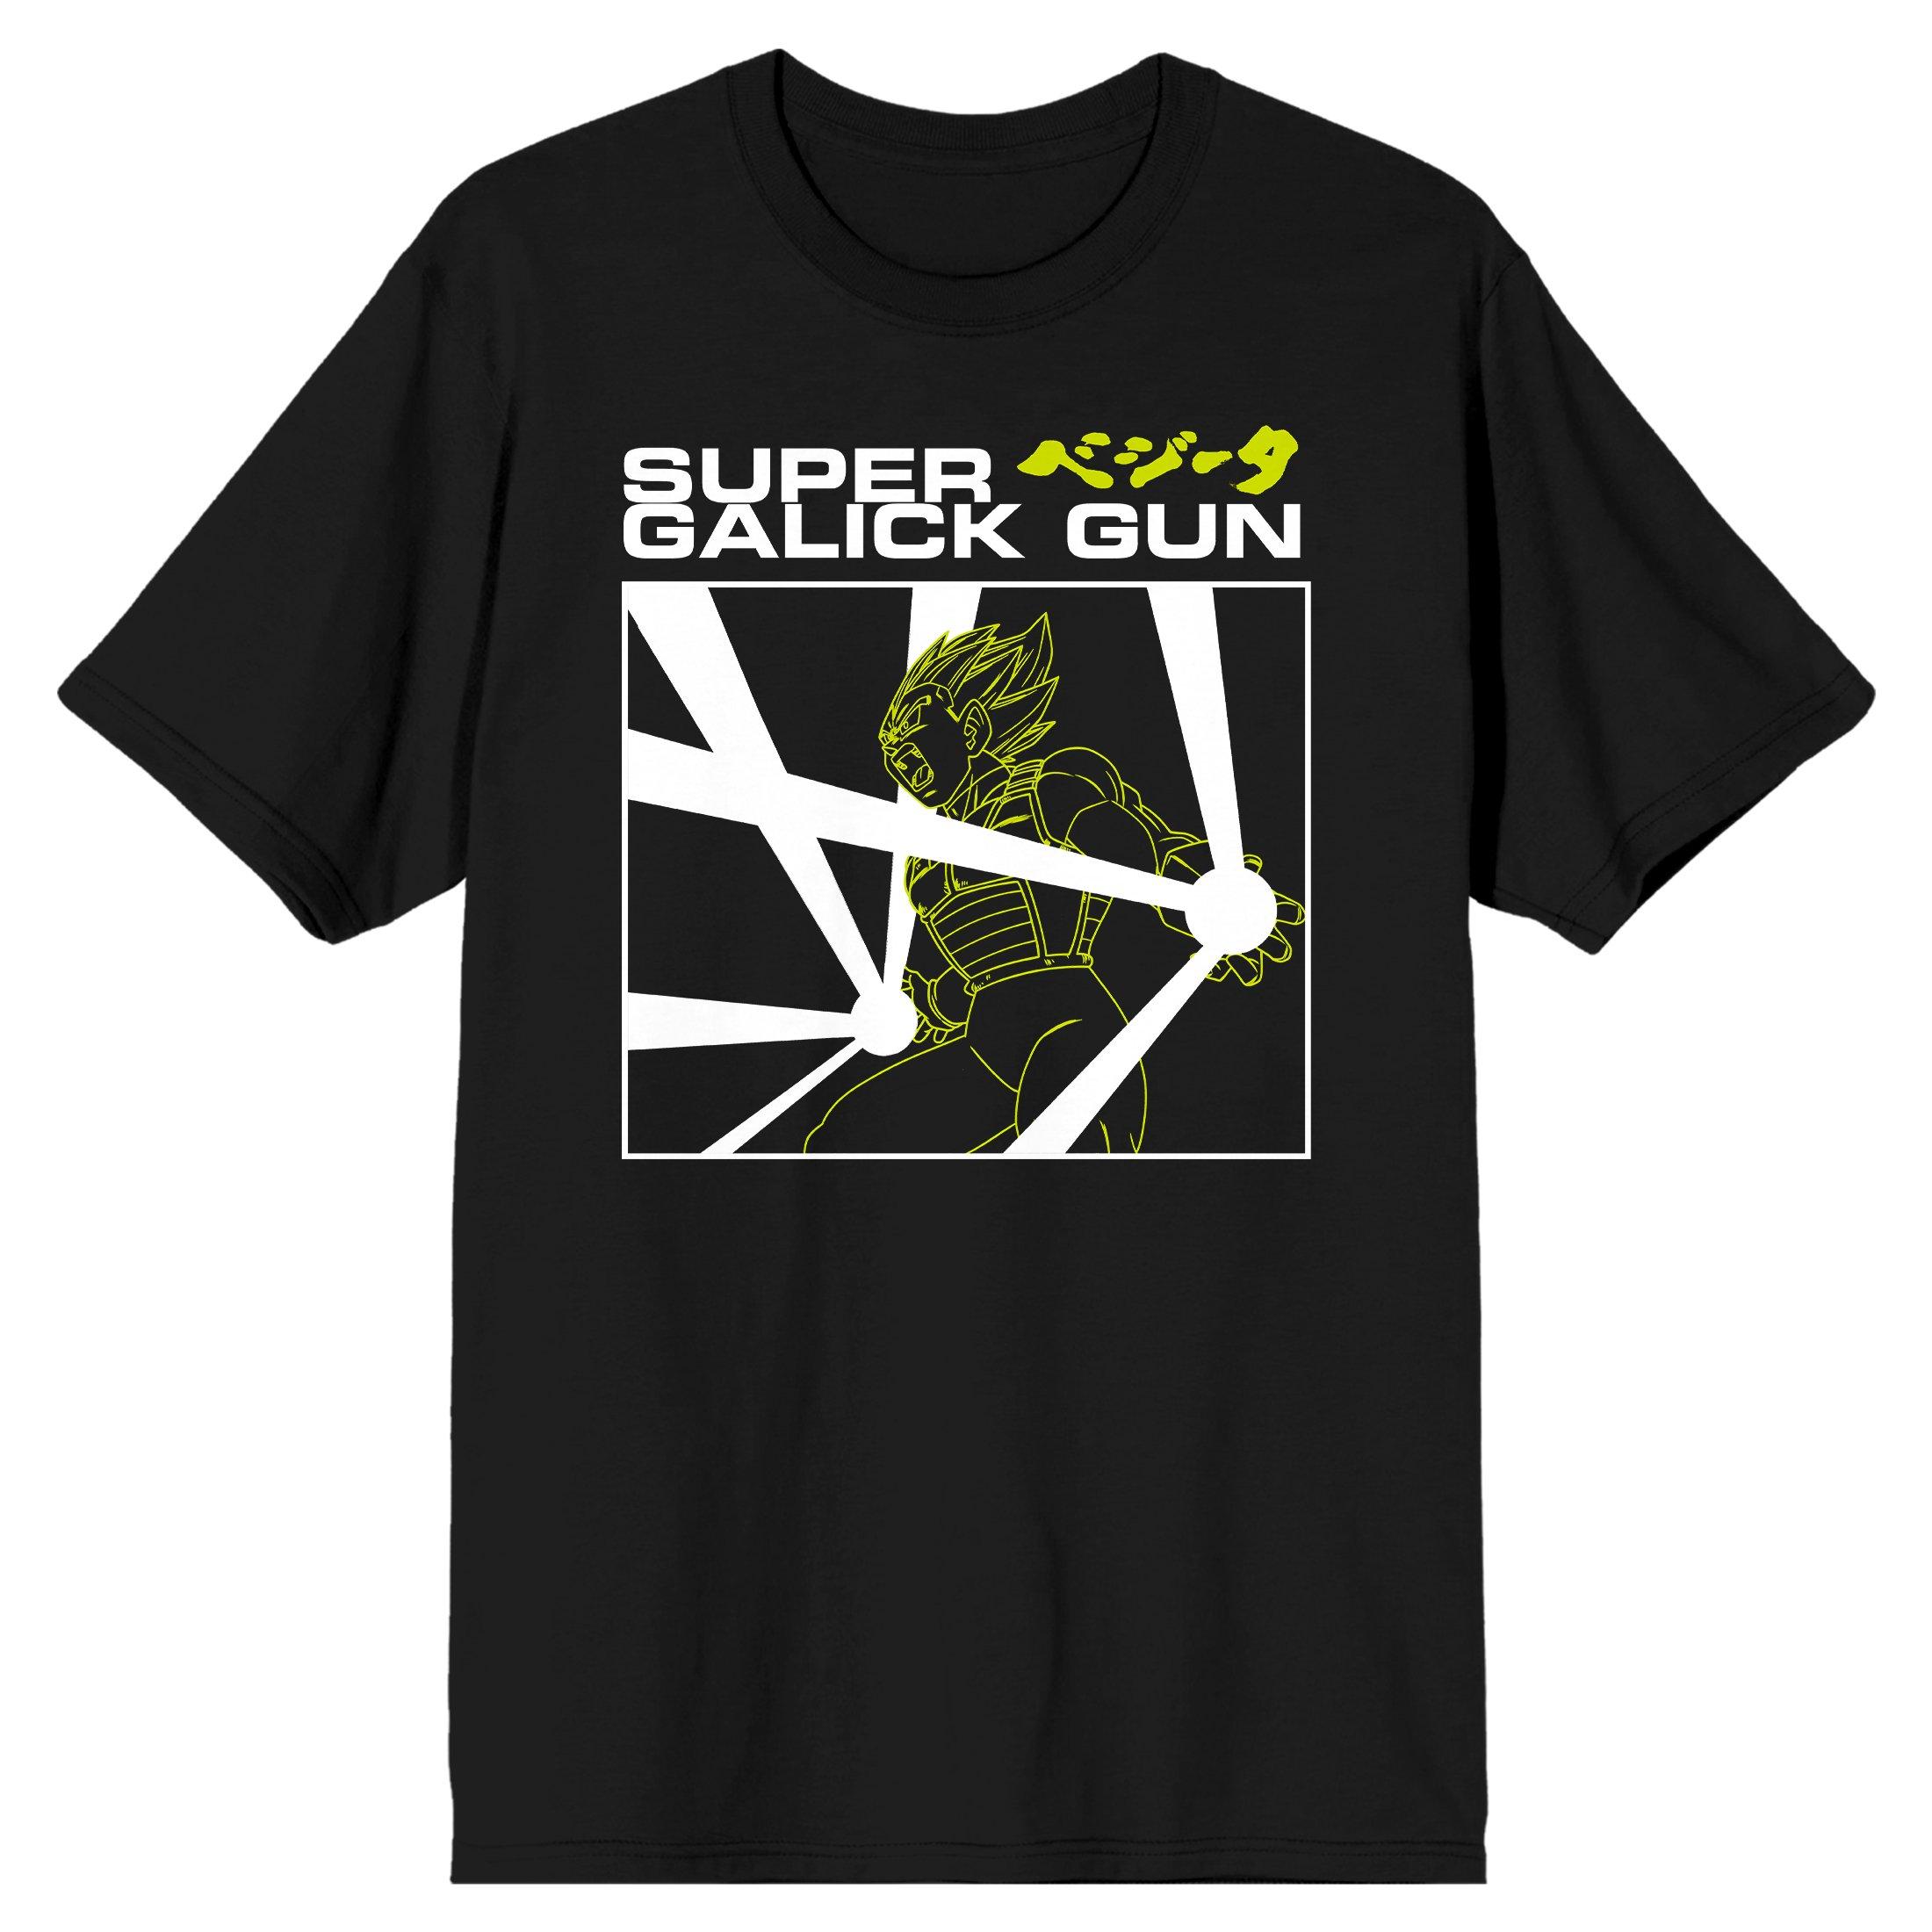 Dragon Ball Super Galick Gun Men's Black Short Sleeve T-Shirt